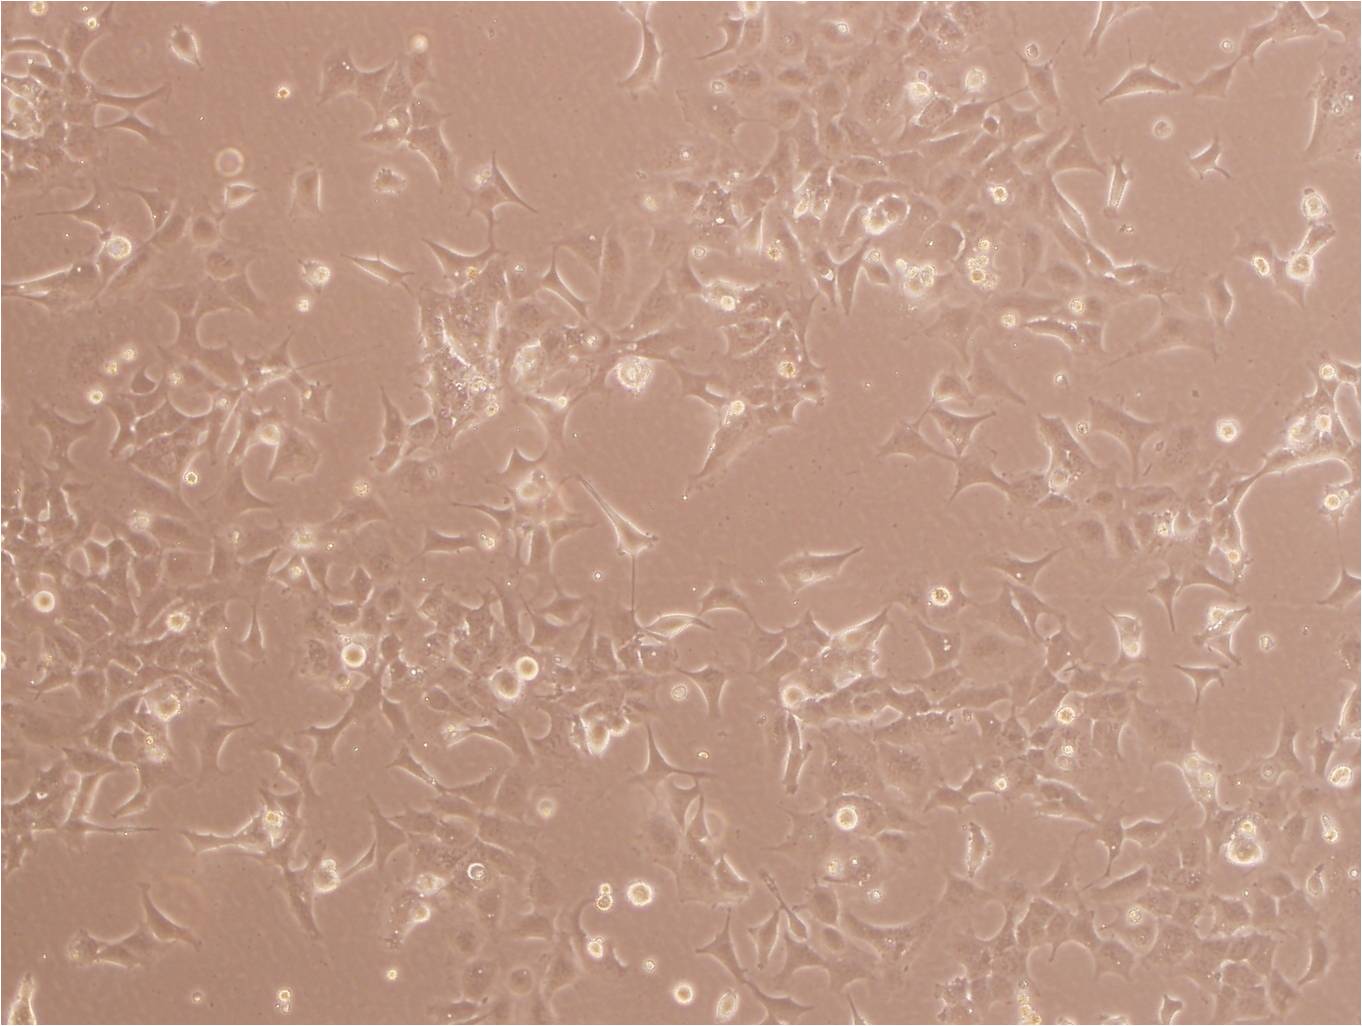 NH-6 Cell:人肾上腺神经母细胞瘤细胞系